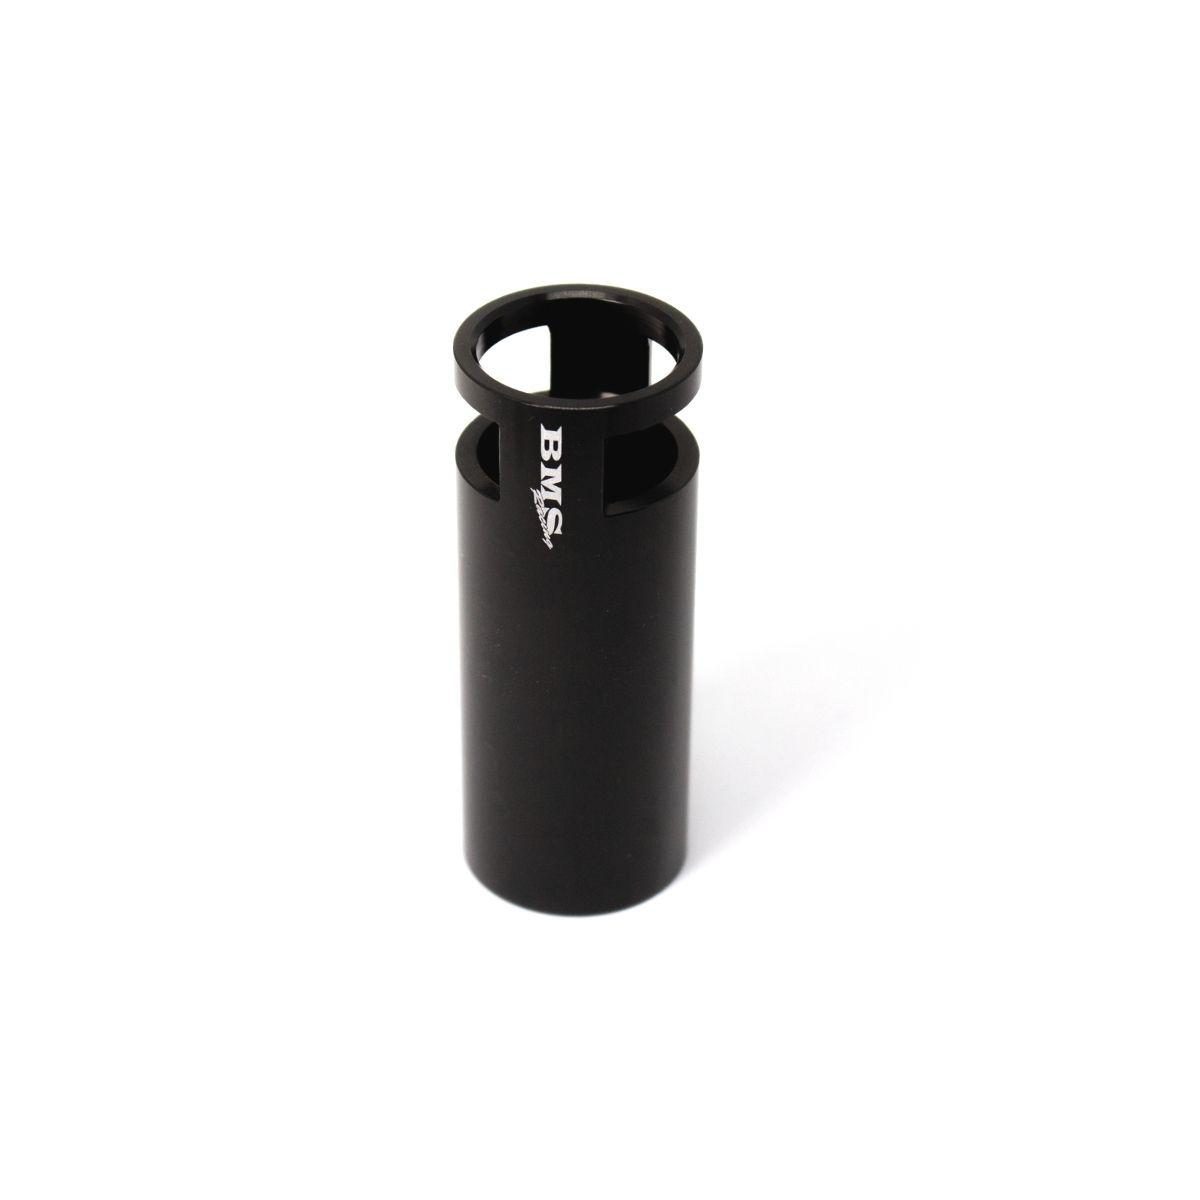 Protector largo tubo refrigerante KTM, HUSQVARNA, GASGAS – Negro